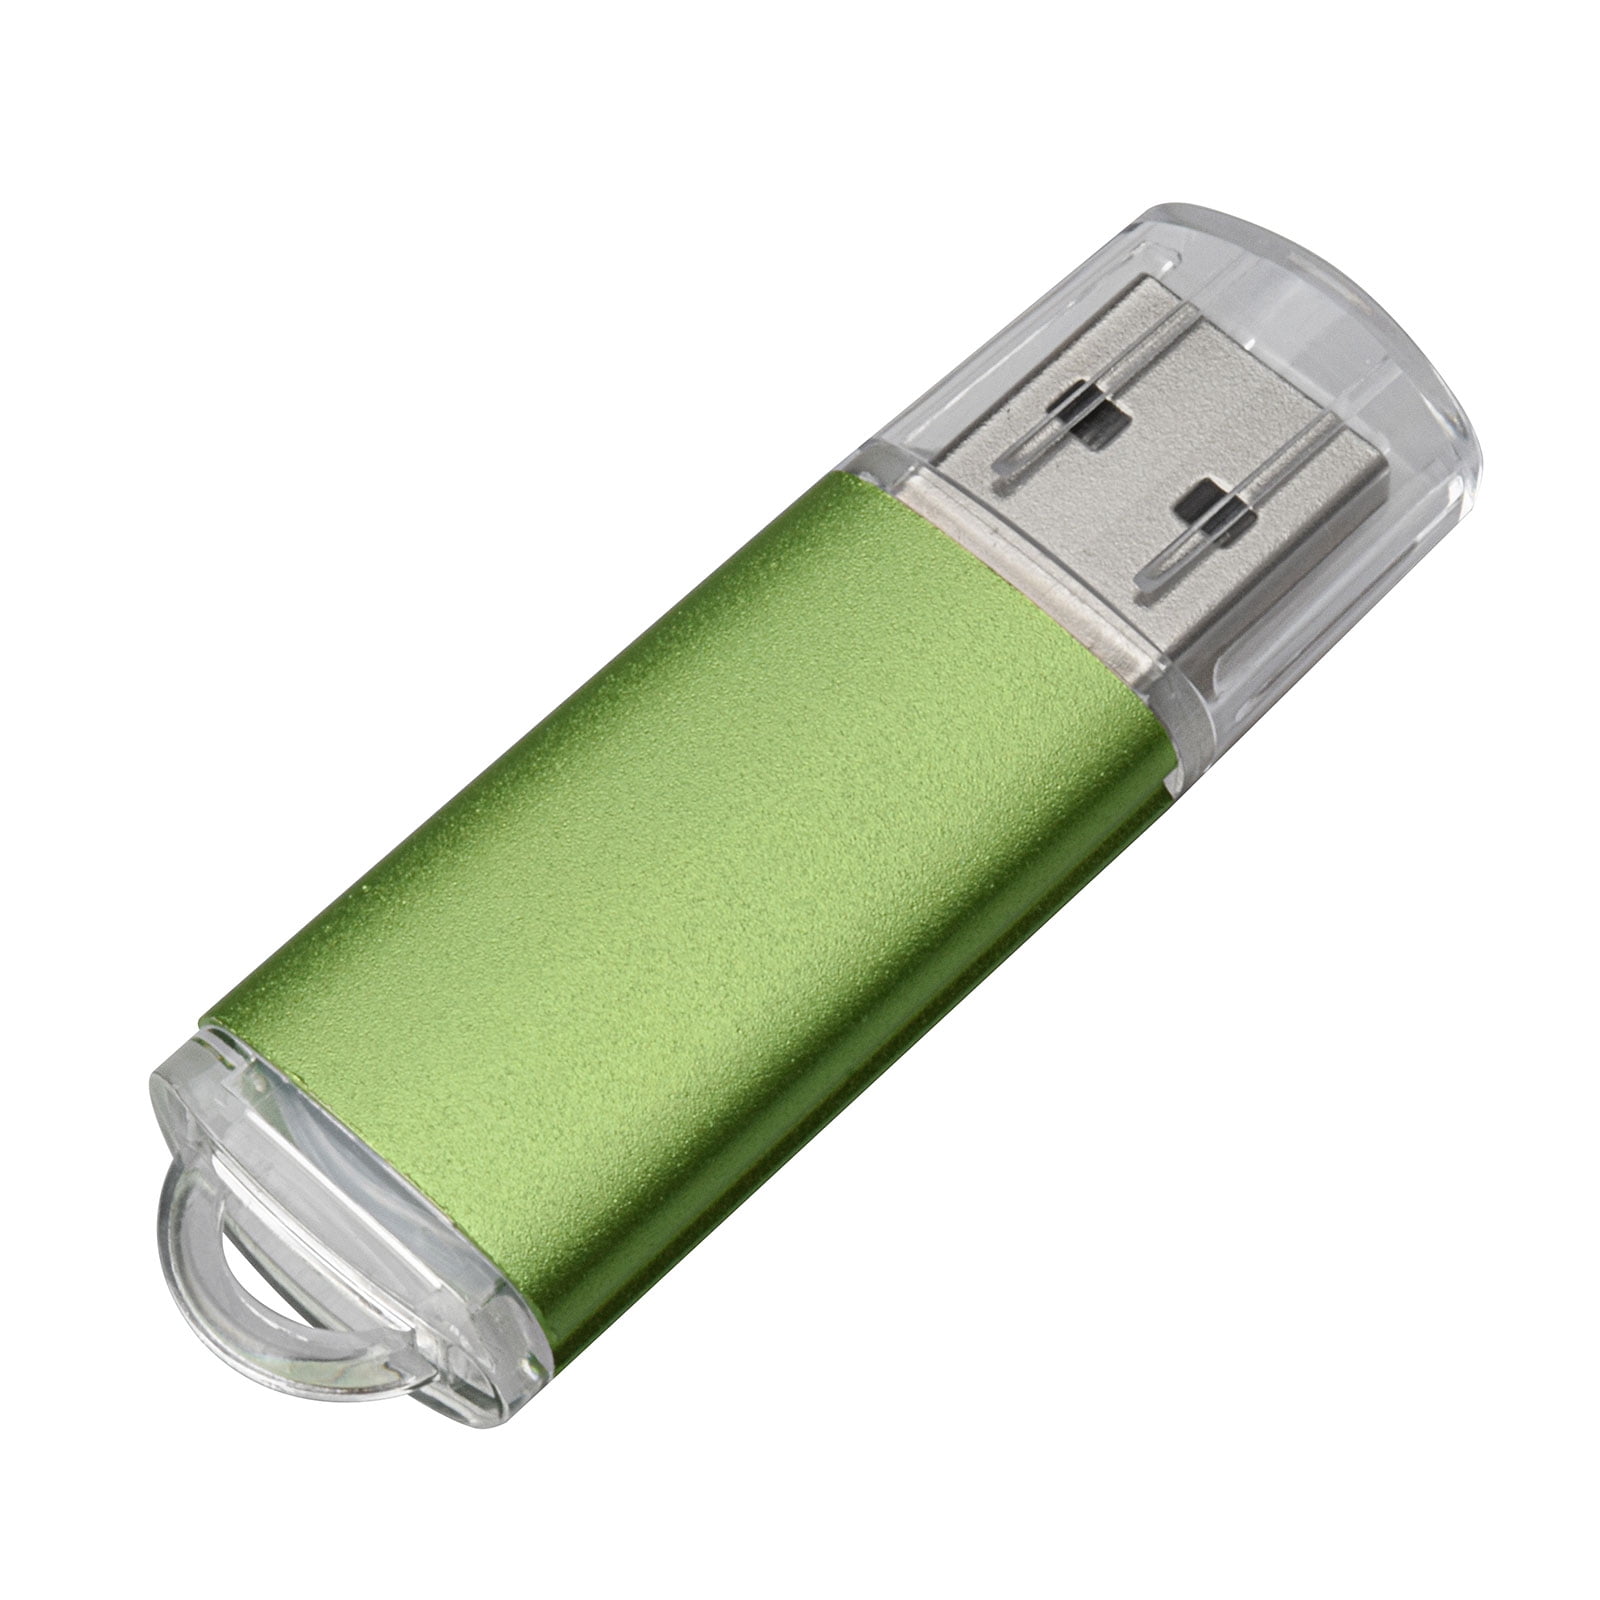 Memory Stick 2 Pack 32GB USB 2.0 Flash Drives Thumb Drive Pen Drive by SIMMAX 32GB Blue Green 